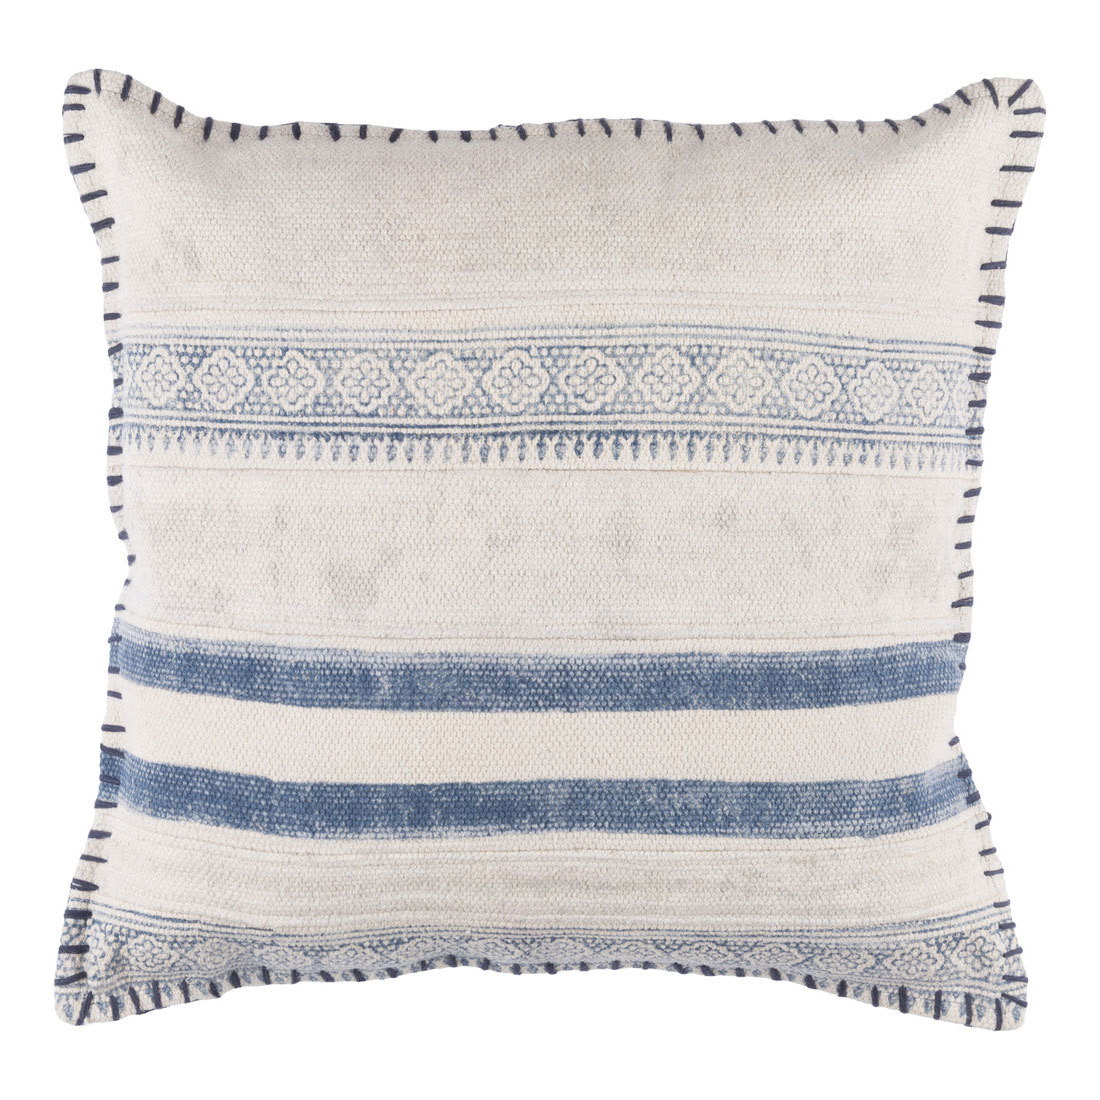 Hmong Sawm Pillow - LL-006
20 x 20 inches
Cotton